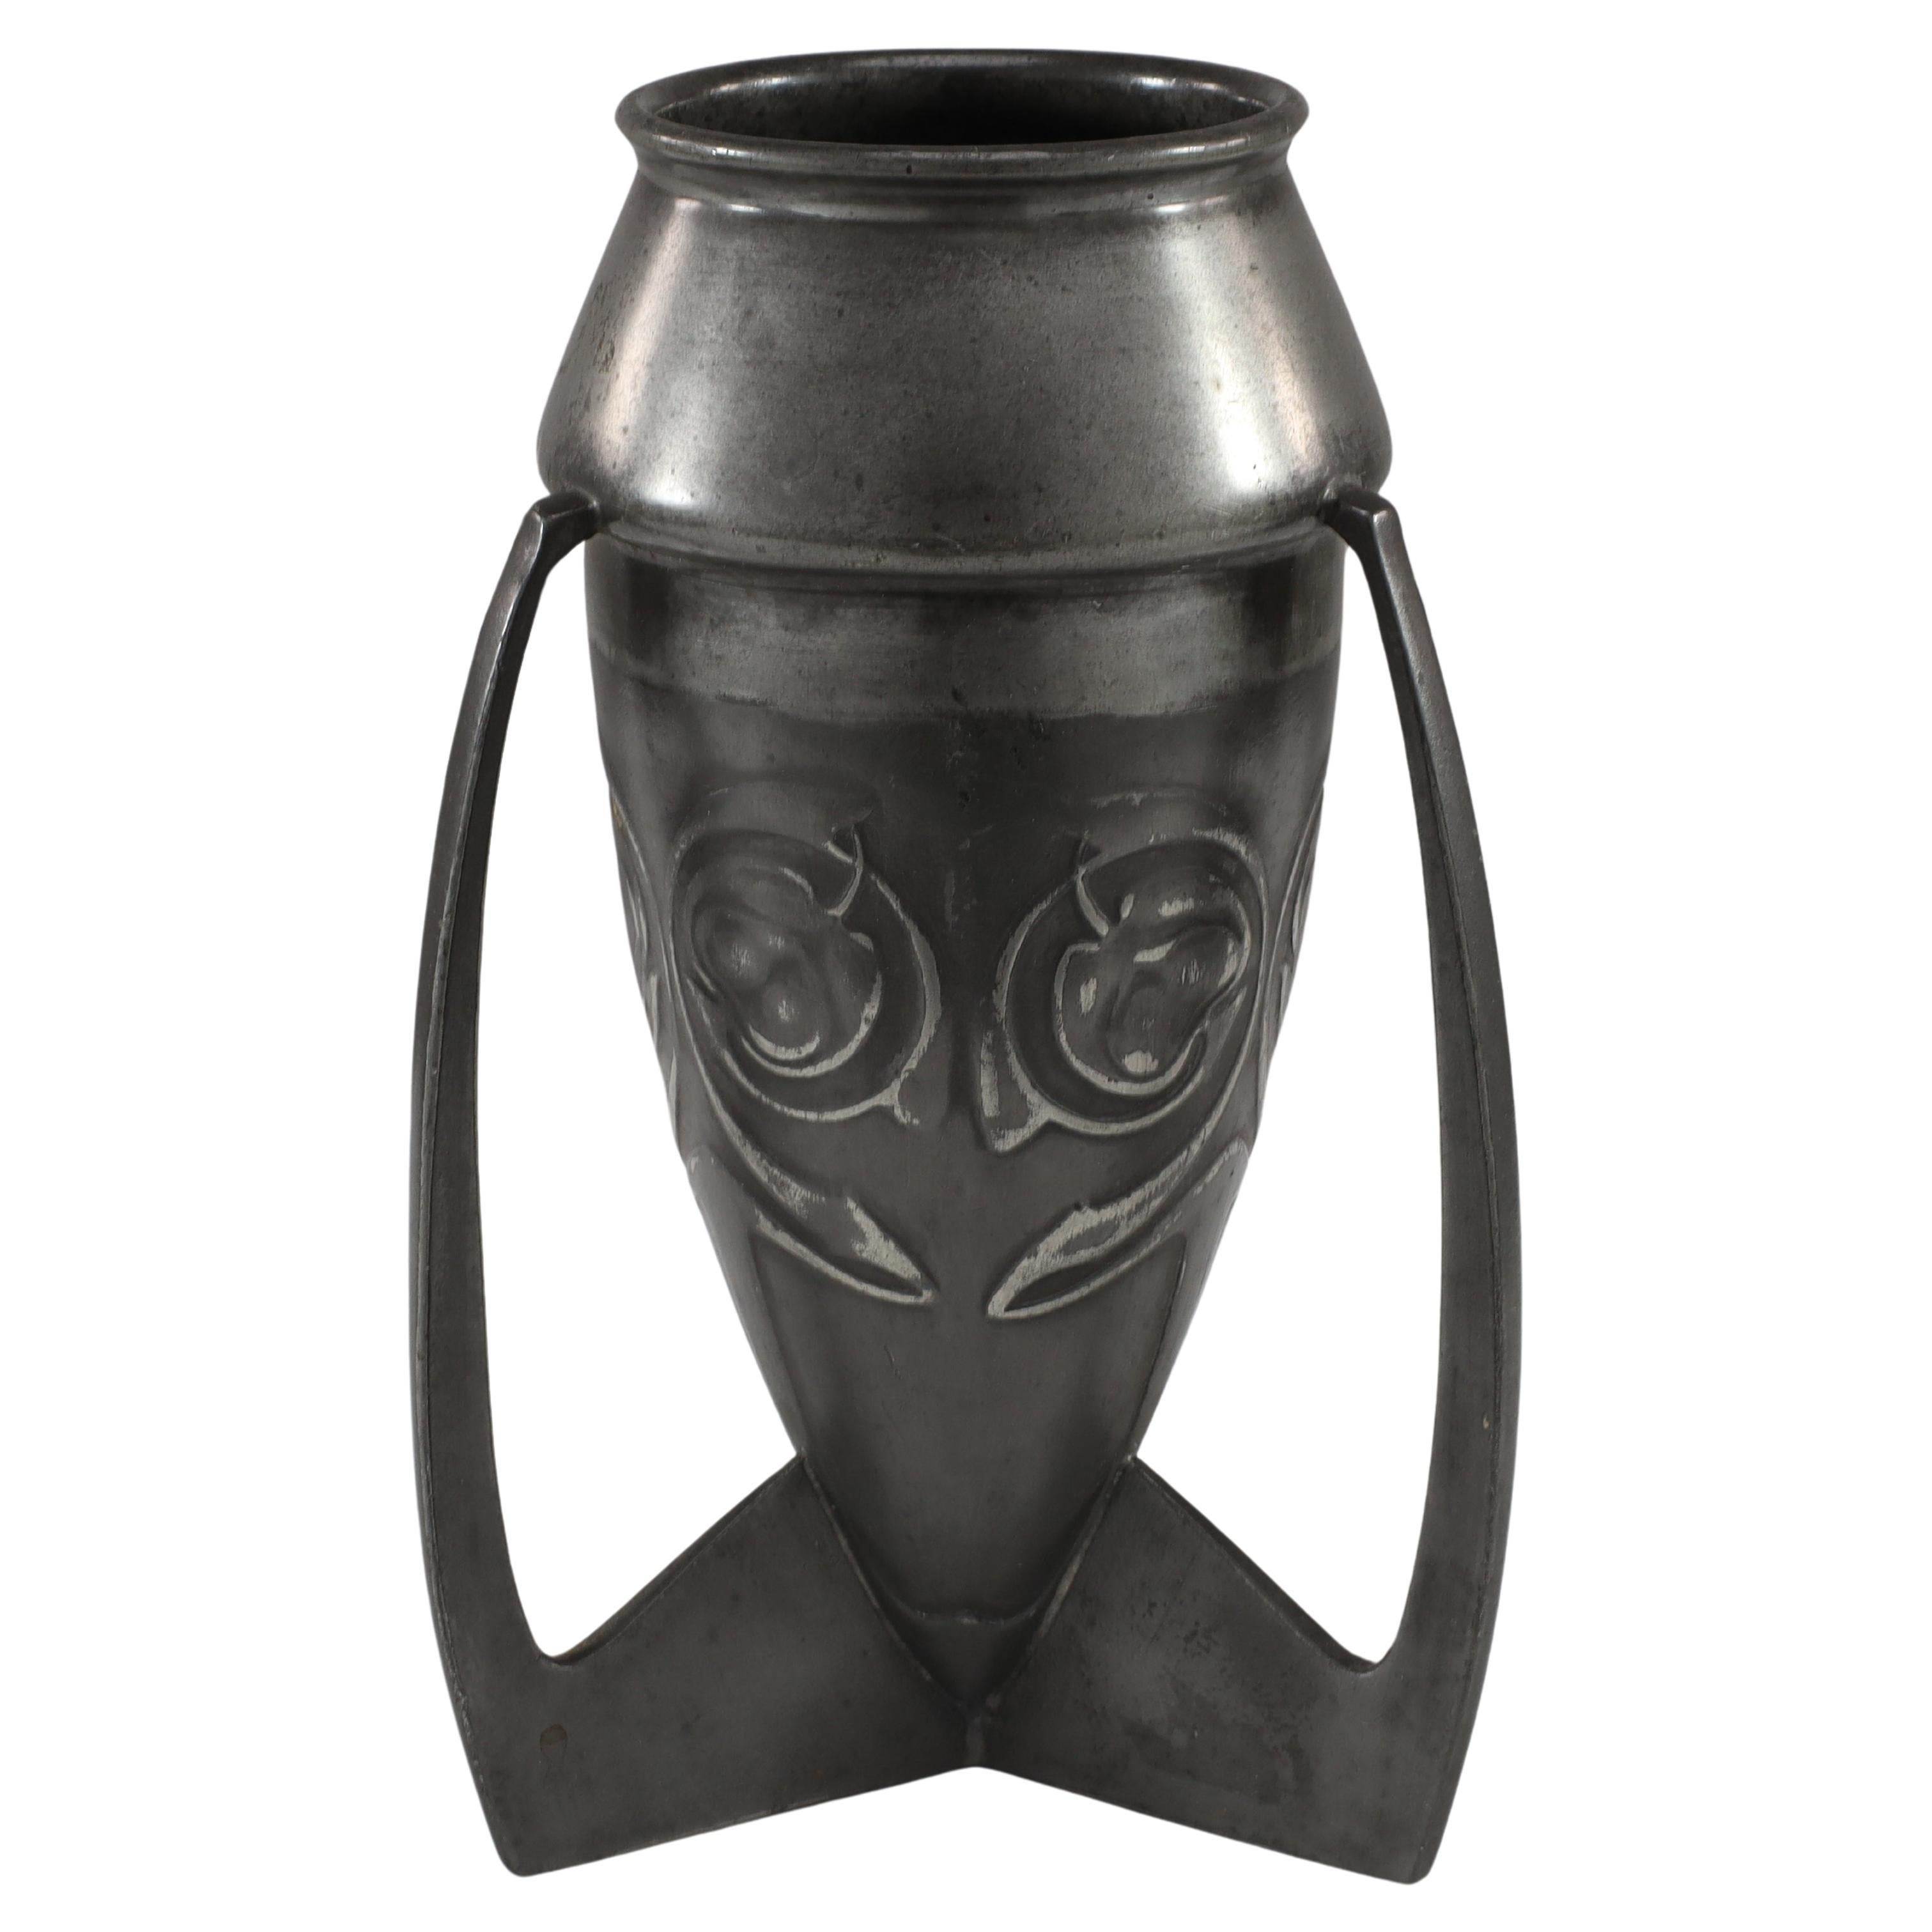 Archibald Knox Liberty & Co English Pewter 0226 An Embossed Pewter Rocket Vase 